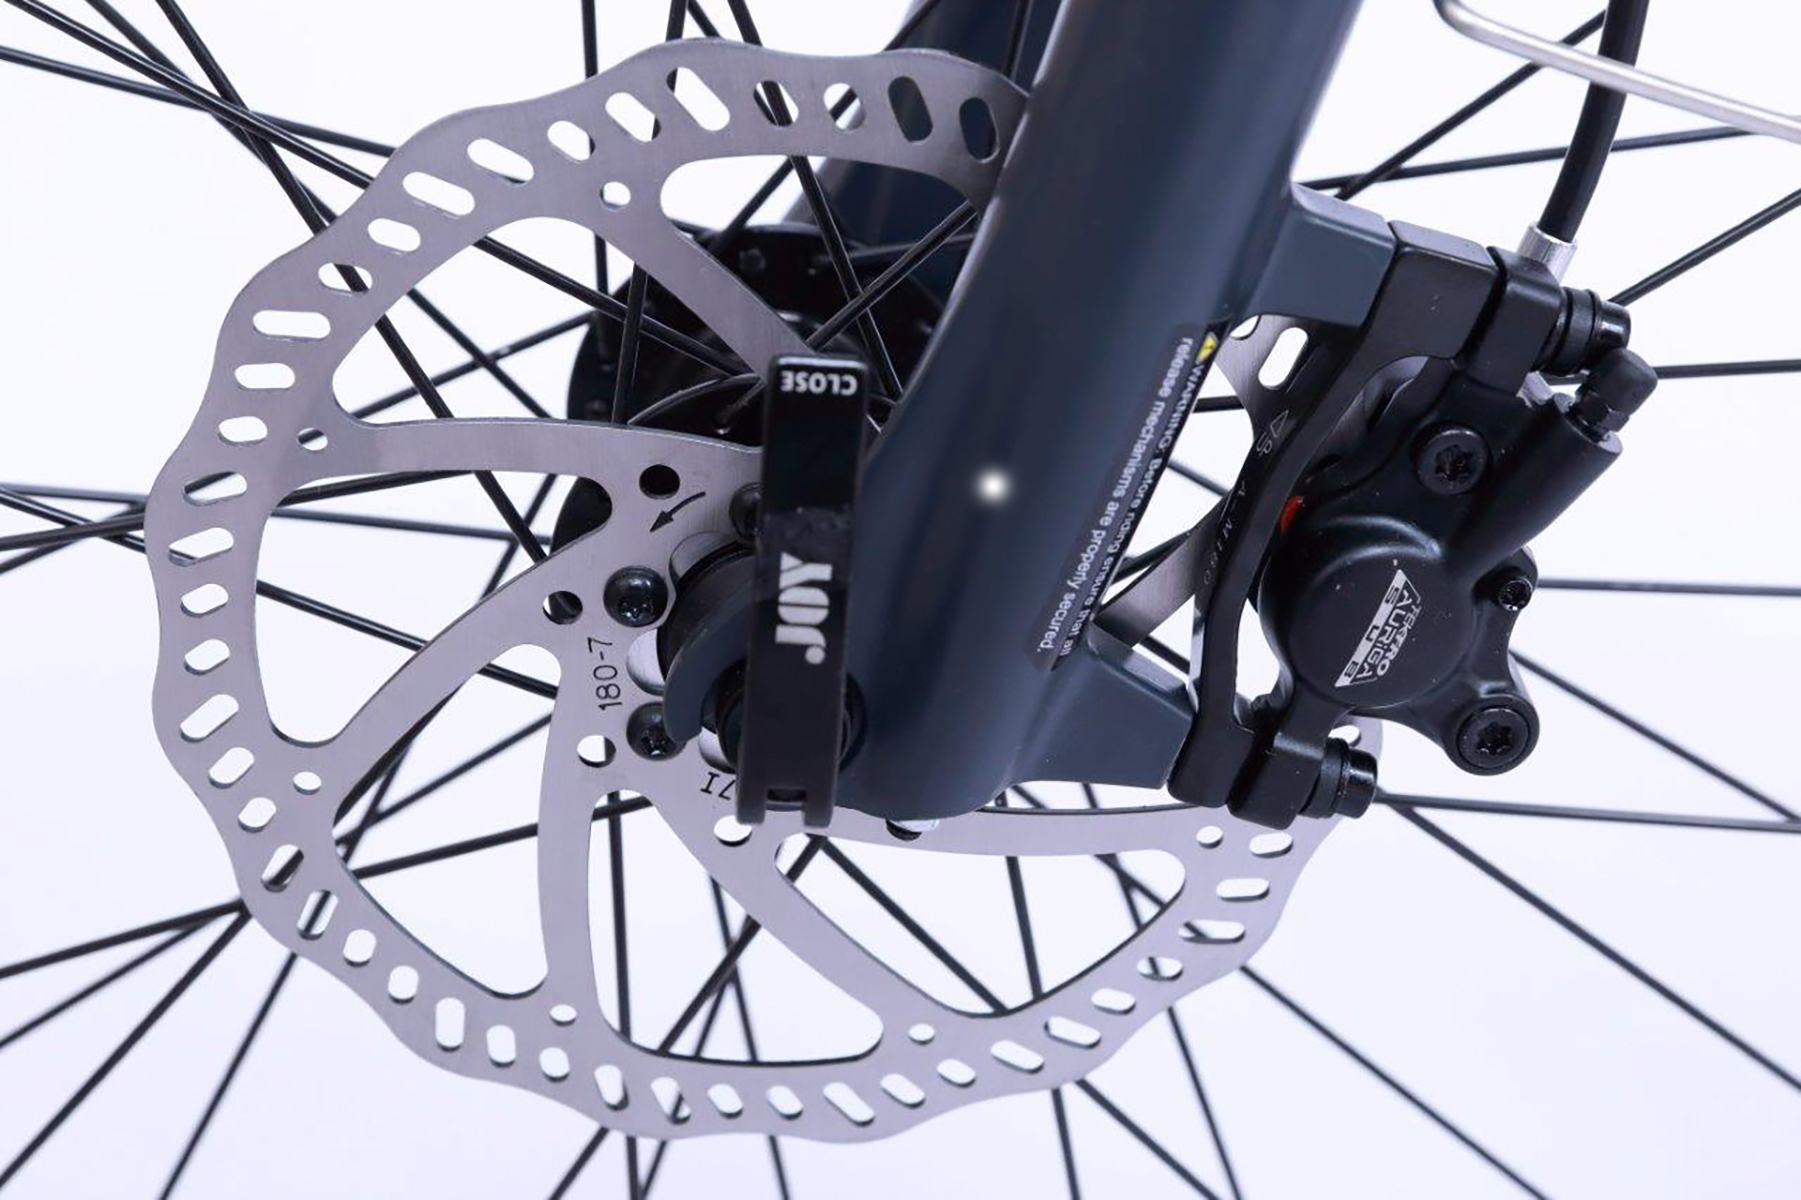 Citybike (Laufradgröße: Zoll, Fahrrad-LED-Beleuchtung Unisex-Rad, elektrische LINGDA 28 blau) 250W